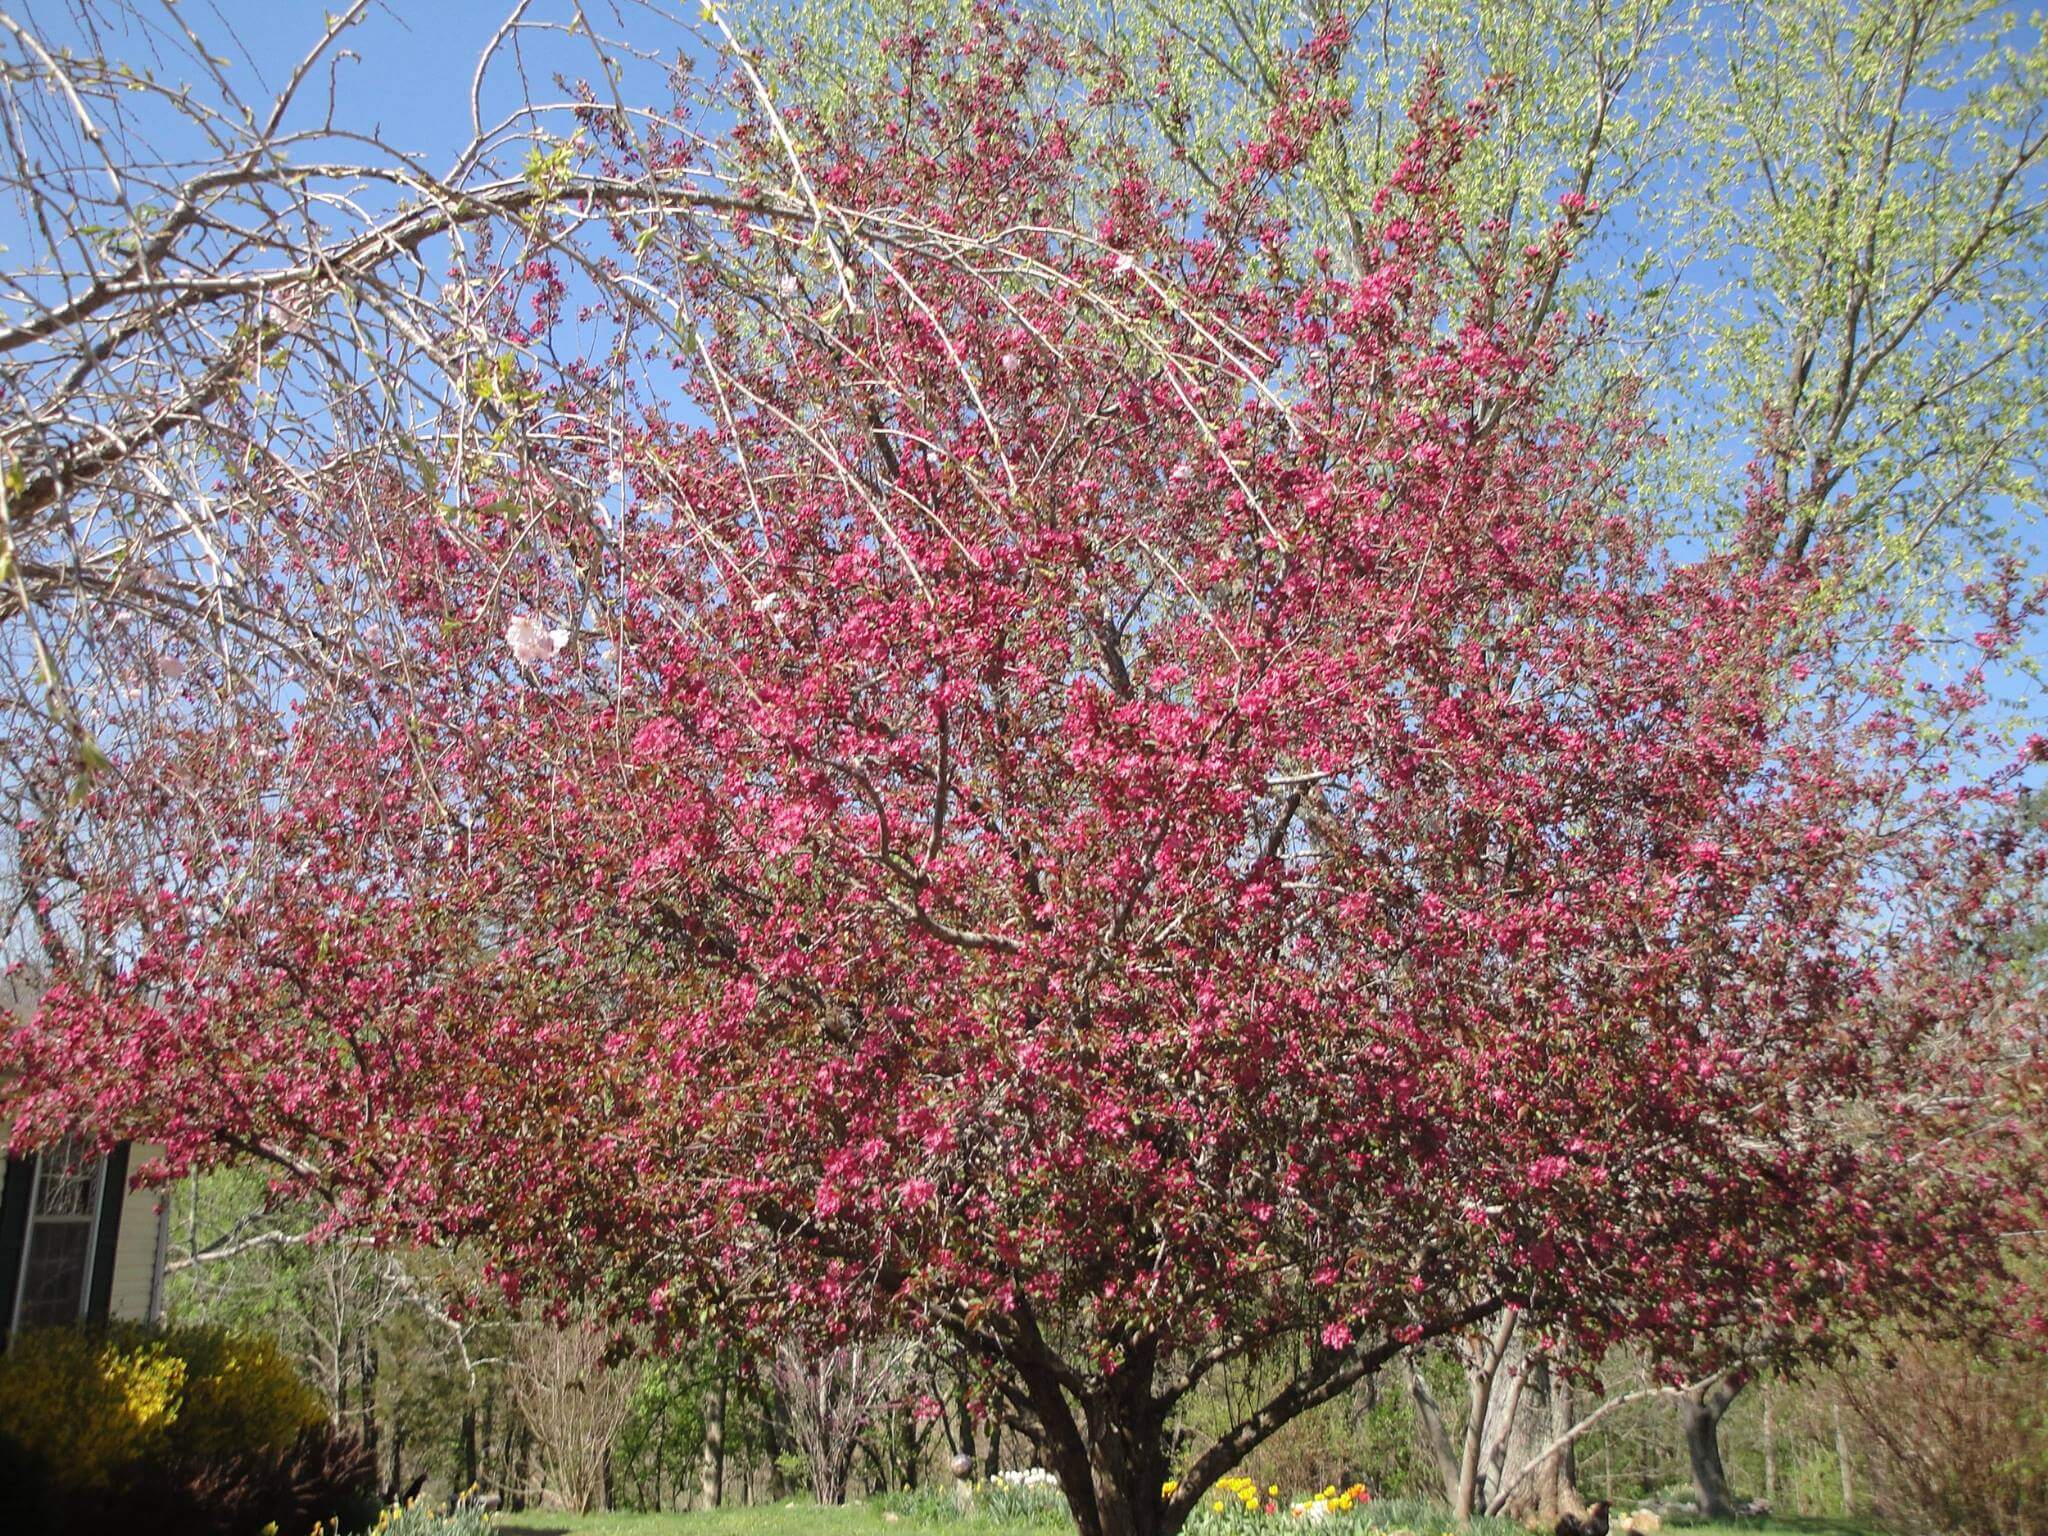 Blue River Valley Farm's beautiful redbud tree